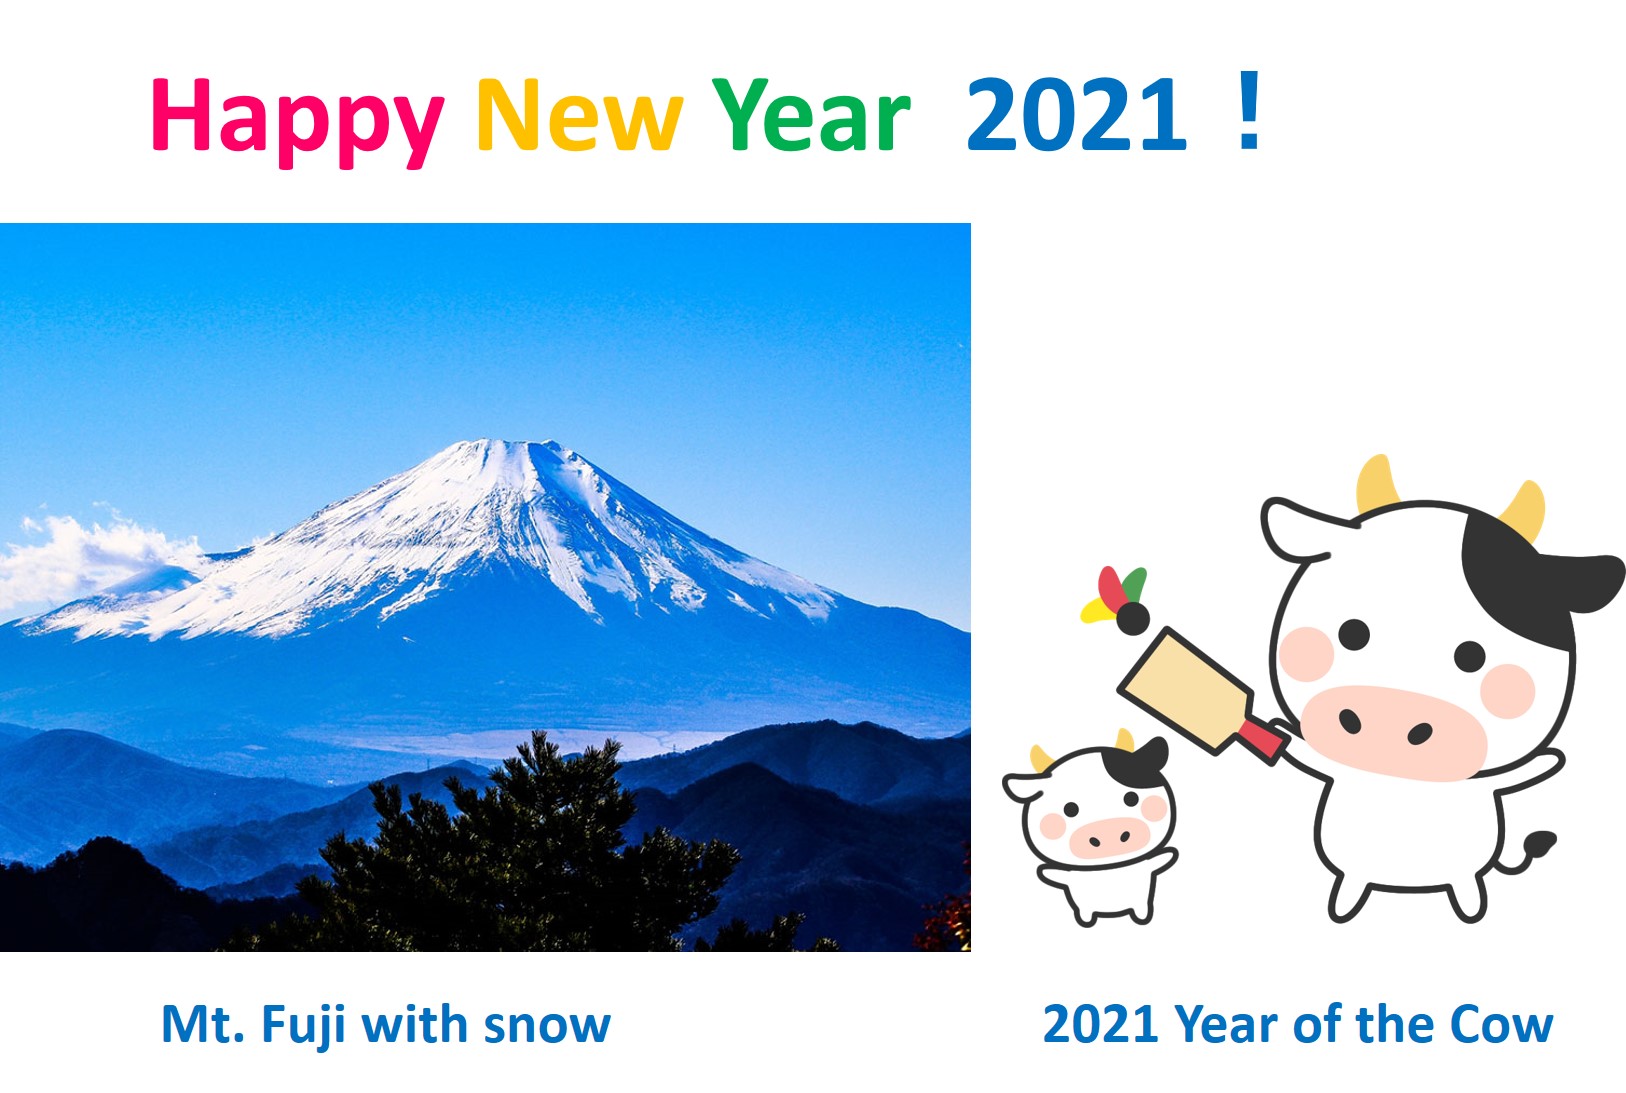 http://osamura-newpath.com/happy%20new%20year%202021.jpg